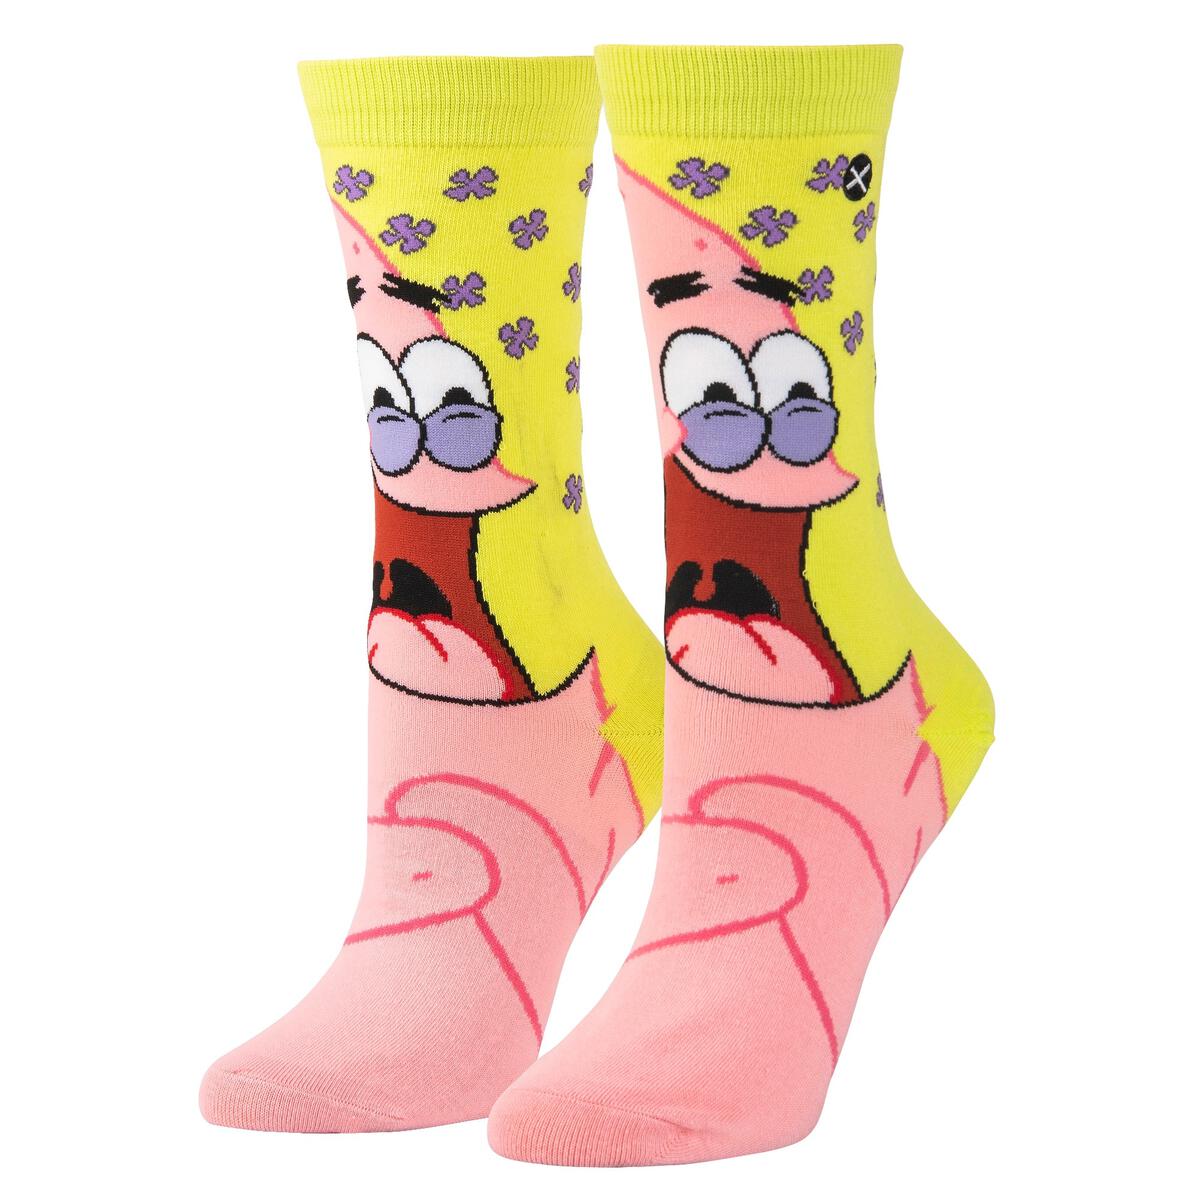 Odd Sox Women's Crew Socks - Big Patrick (Spongebob)